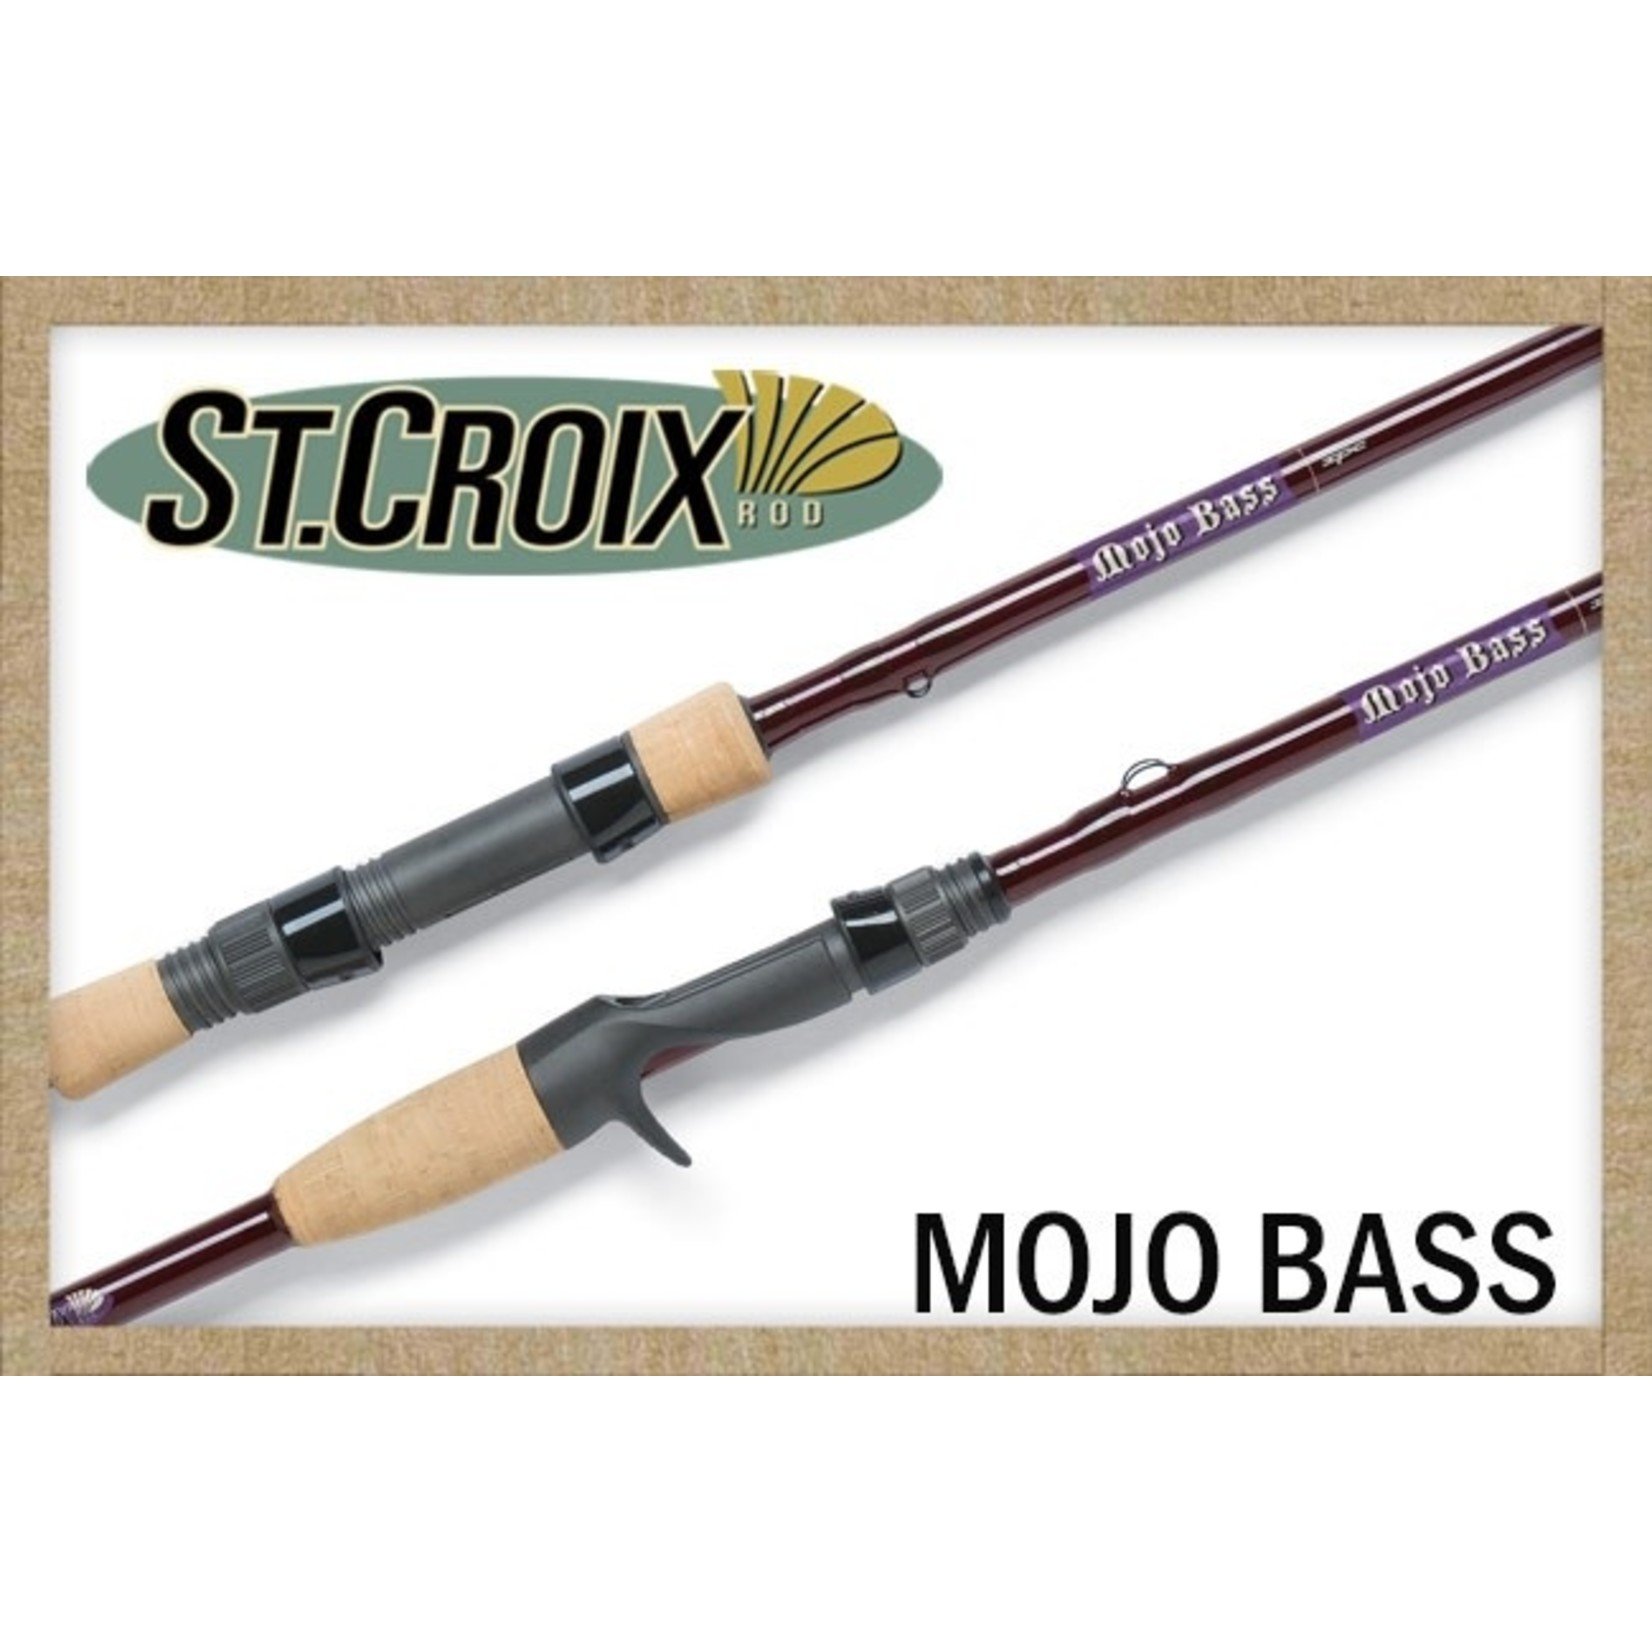 St. Croix Mojo Bass Spinning Rod - 7'1 Medium Fast